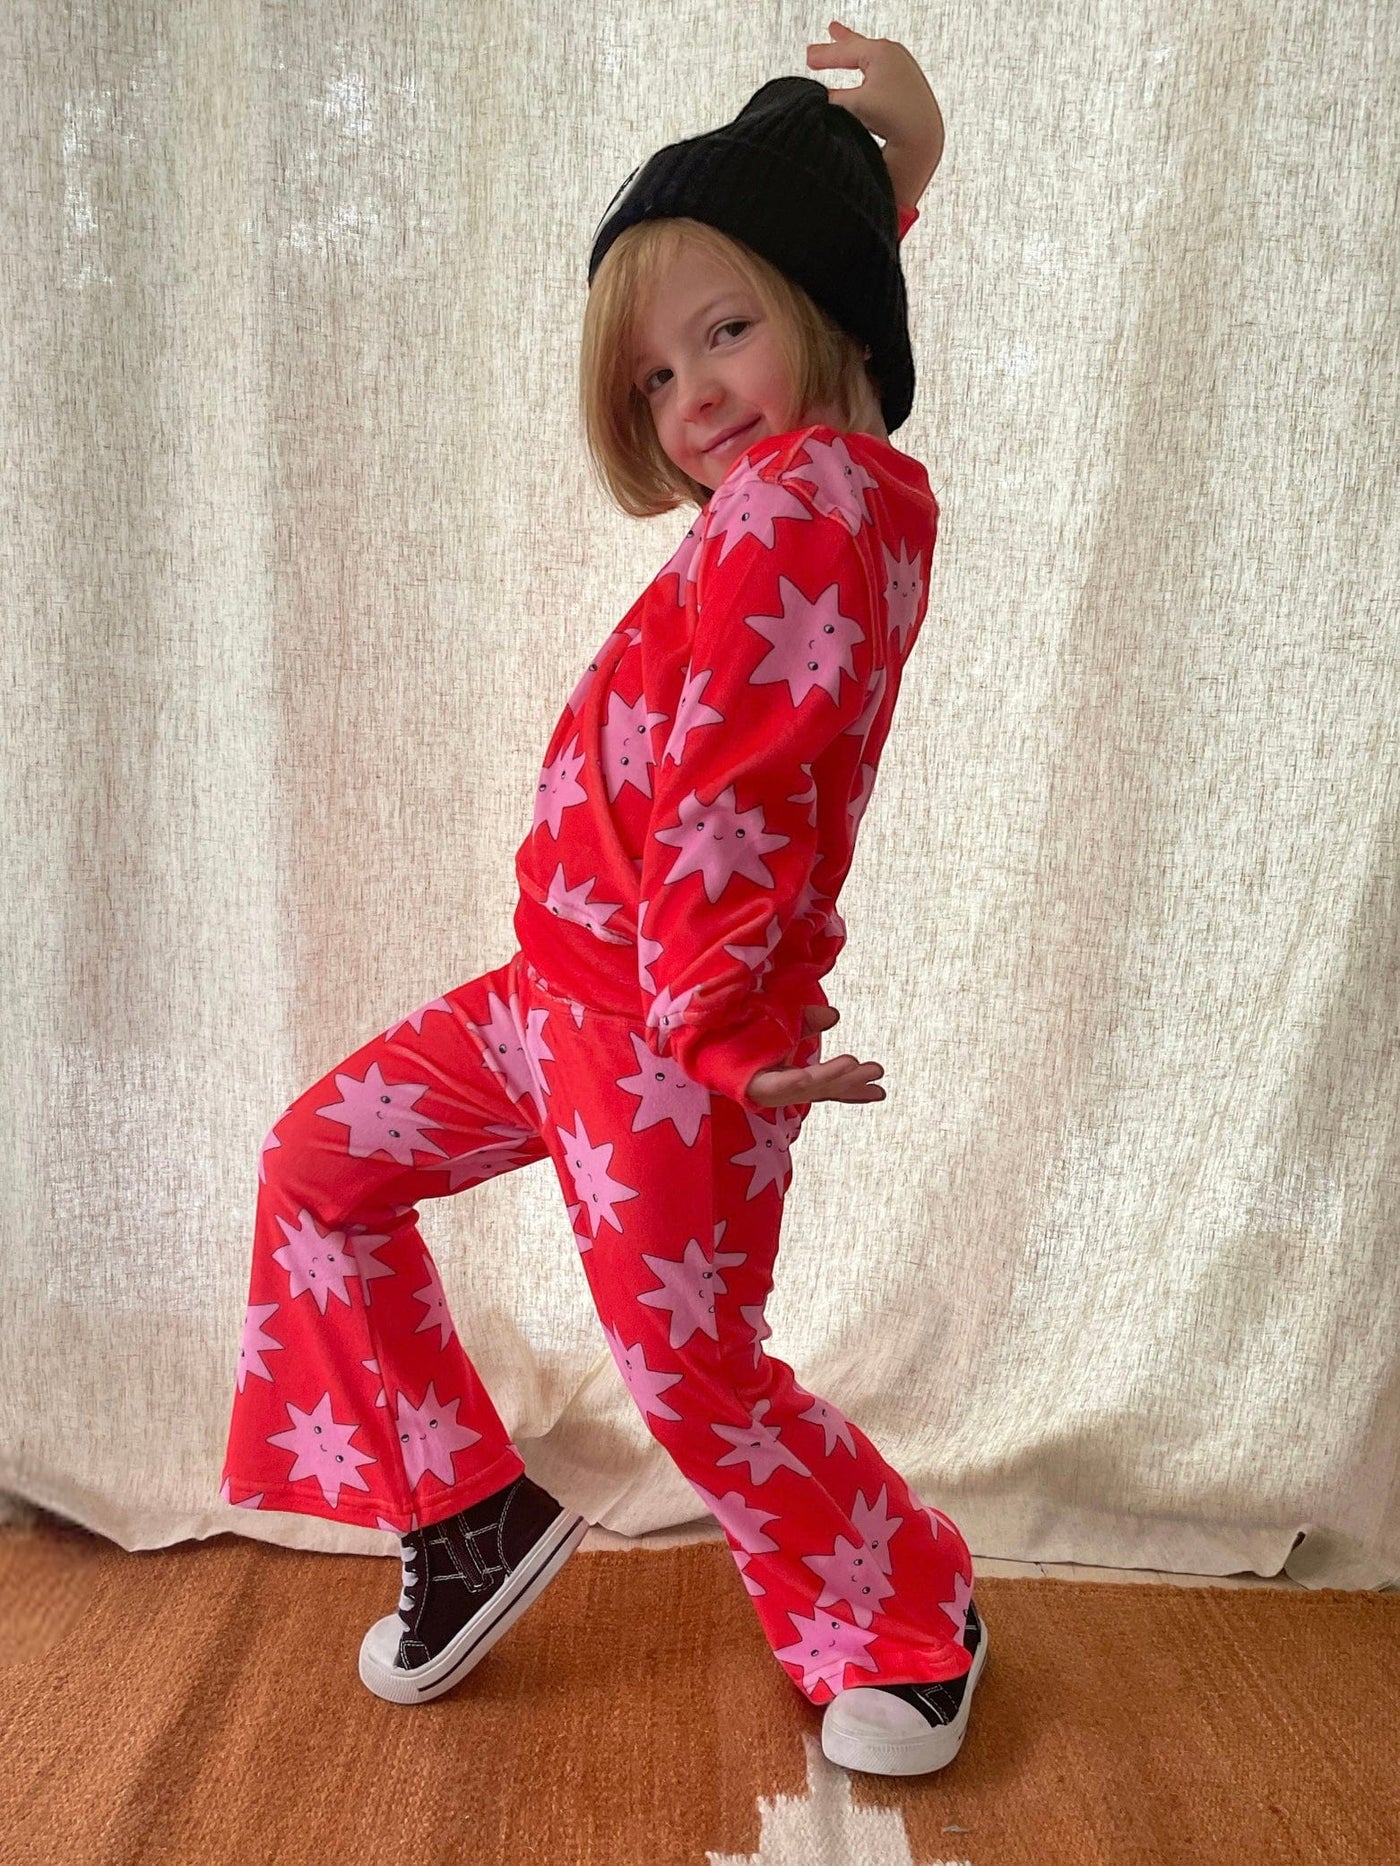 Best Day Ever Kids Baby & Toddler Outfits Retro Velvet Set - Superstar buy online boutique kids clothing